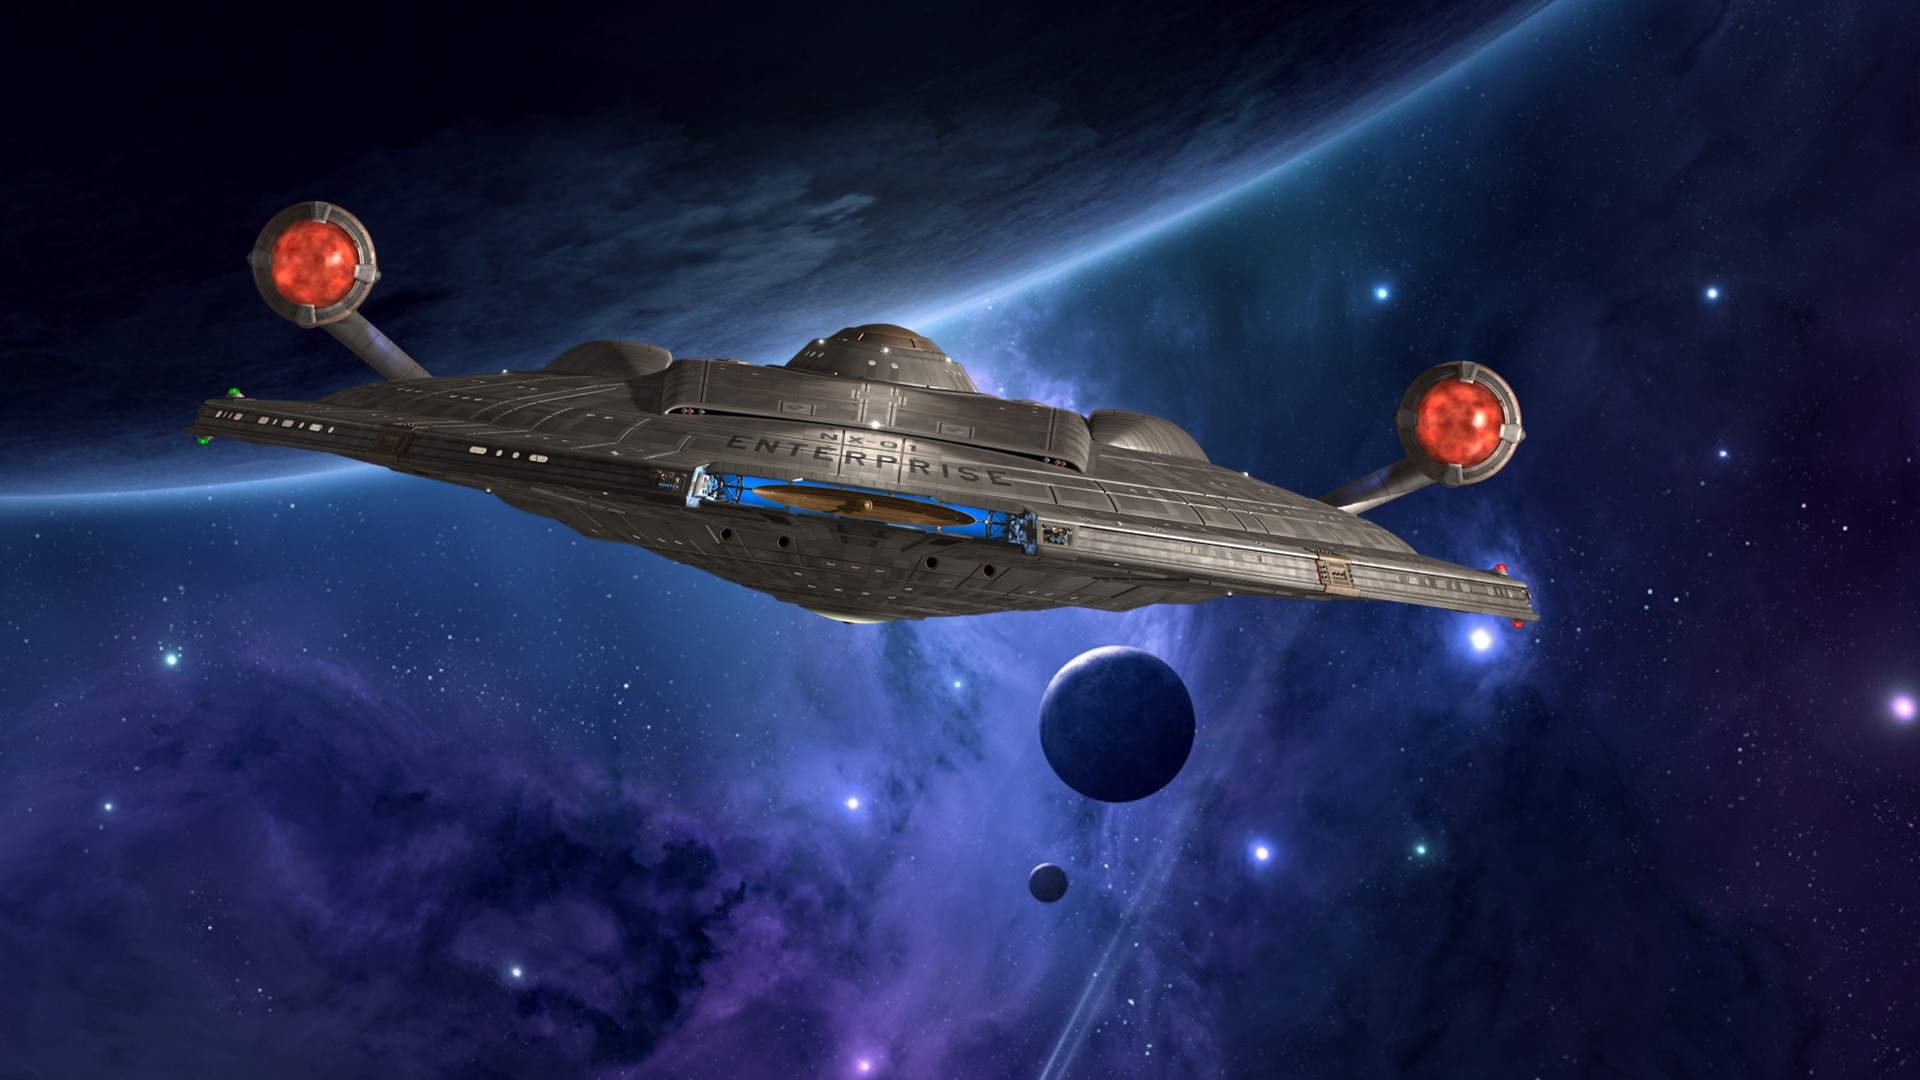 Free download Star Trek Enterprise Wallpapers Pictures Images ...